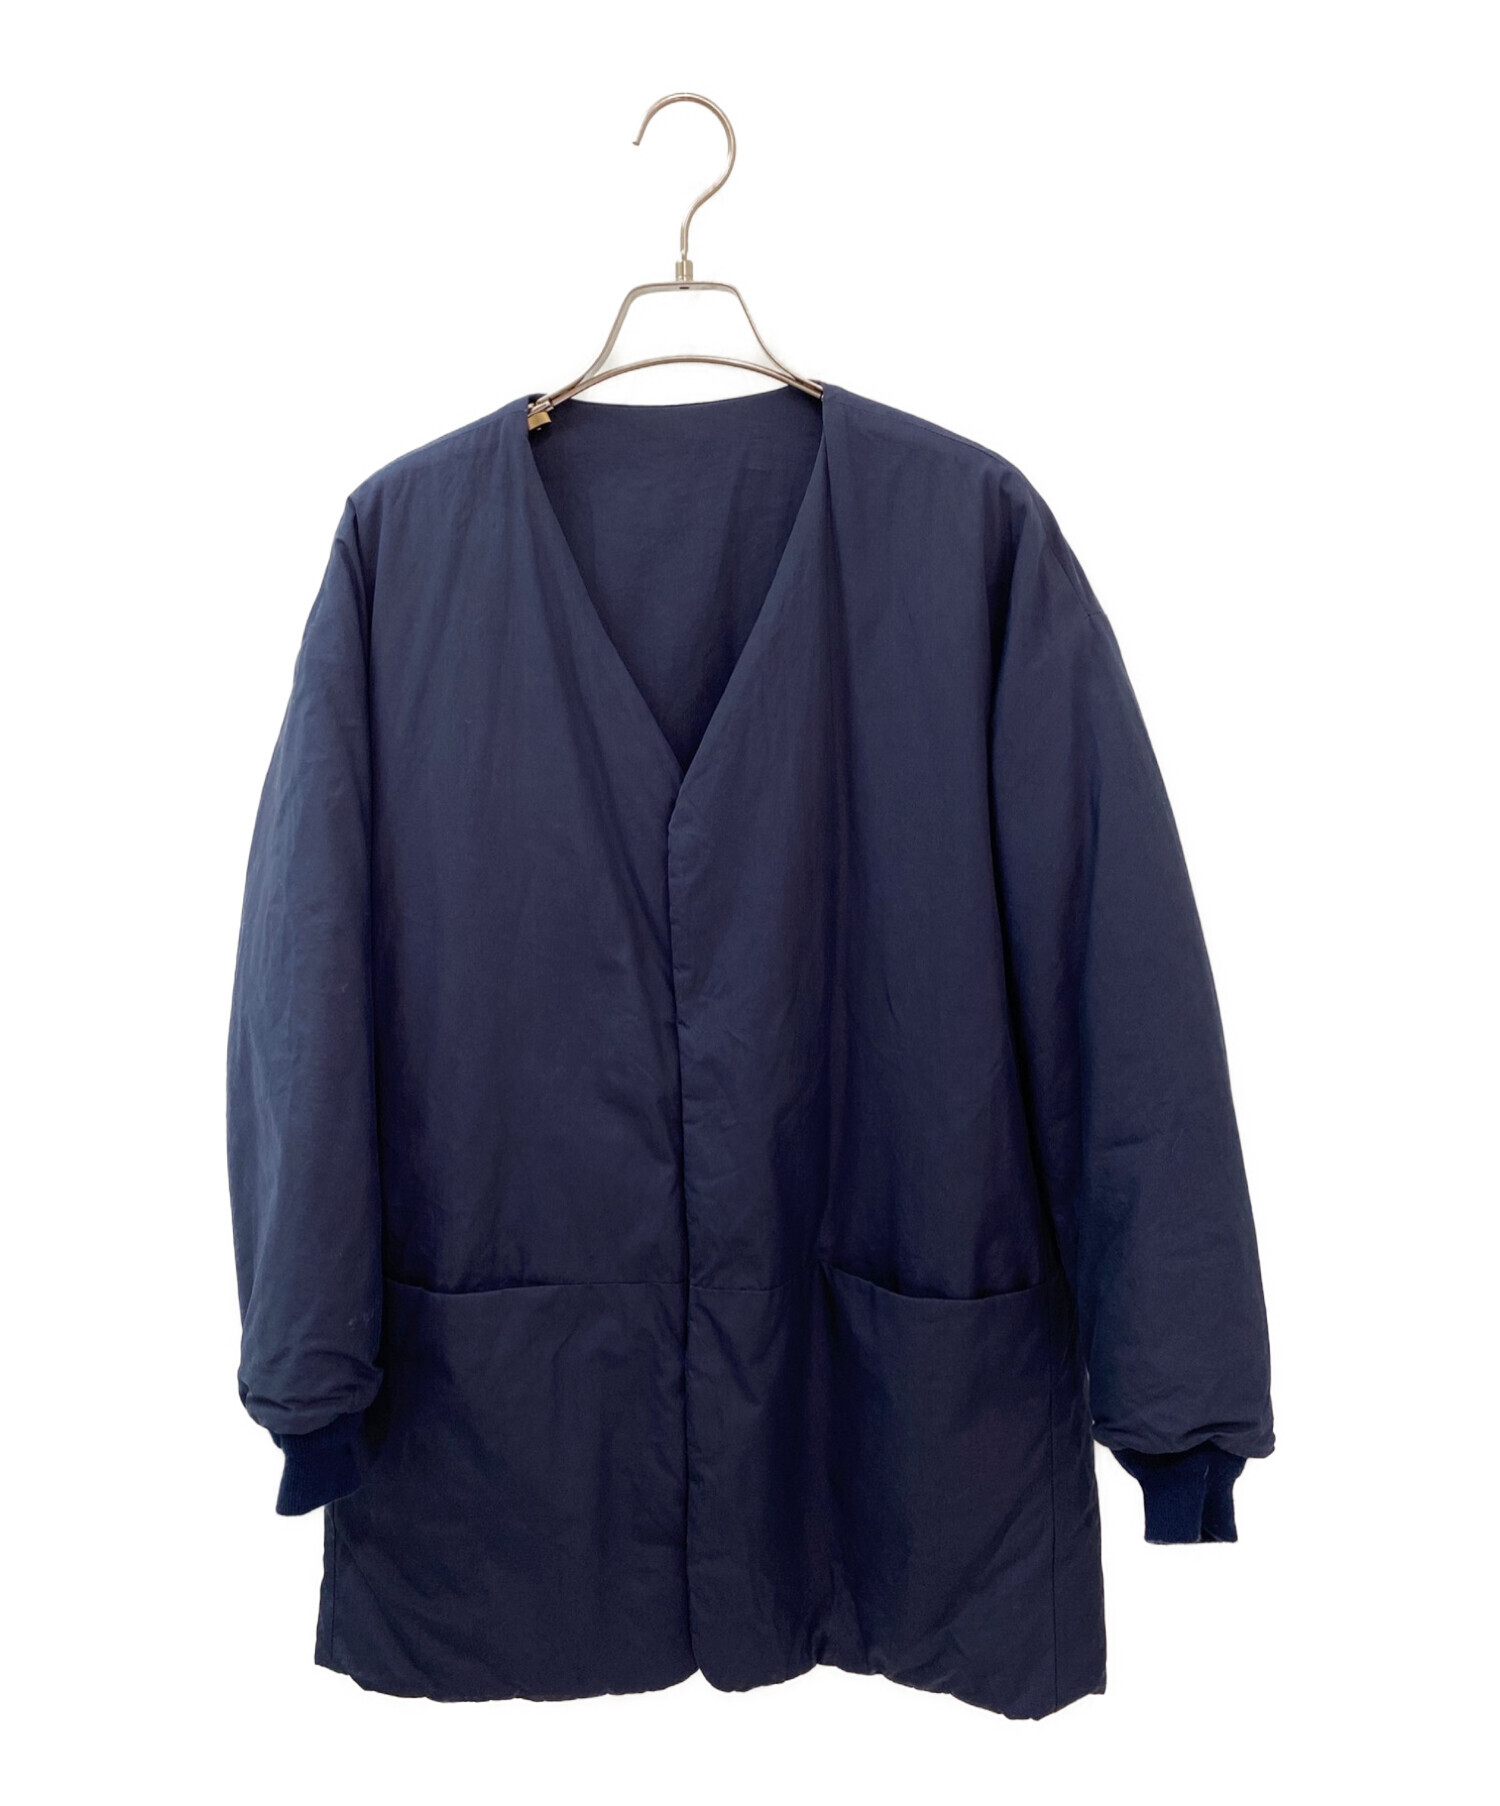 ARTS&SCIENCE (アーツアンドサイエンス) Lining jacket ネイビー サイズ:1